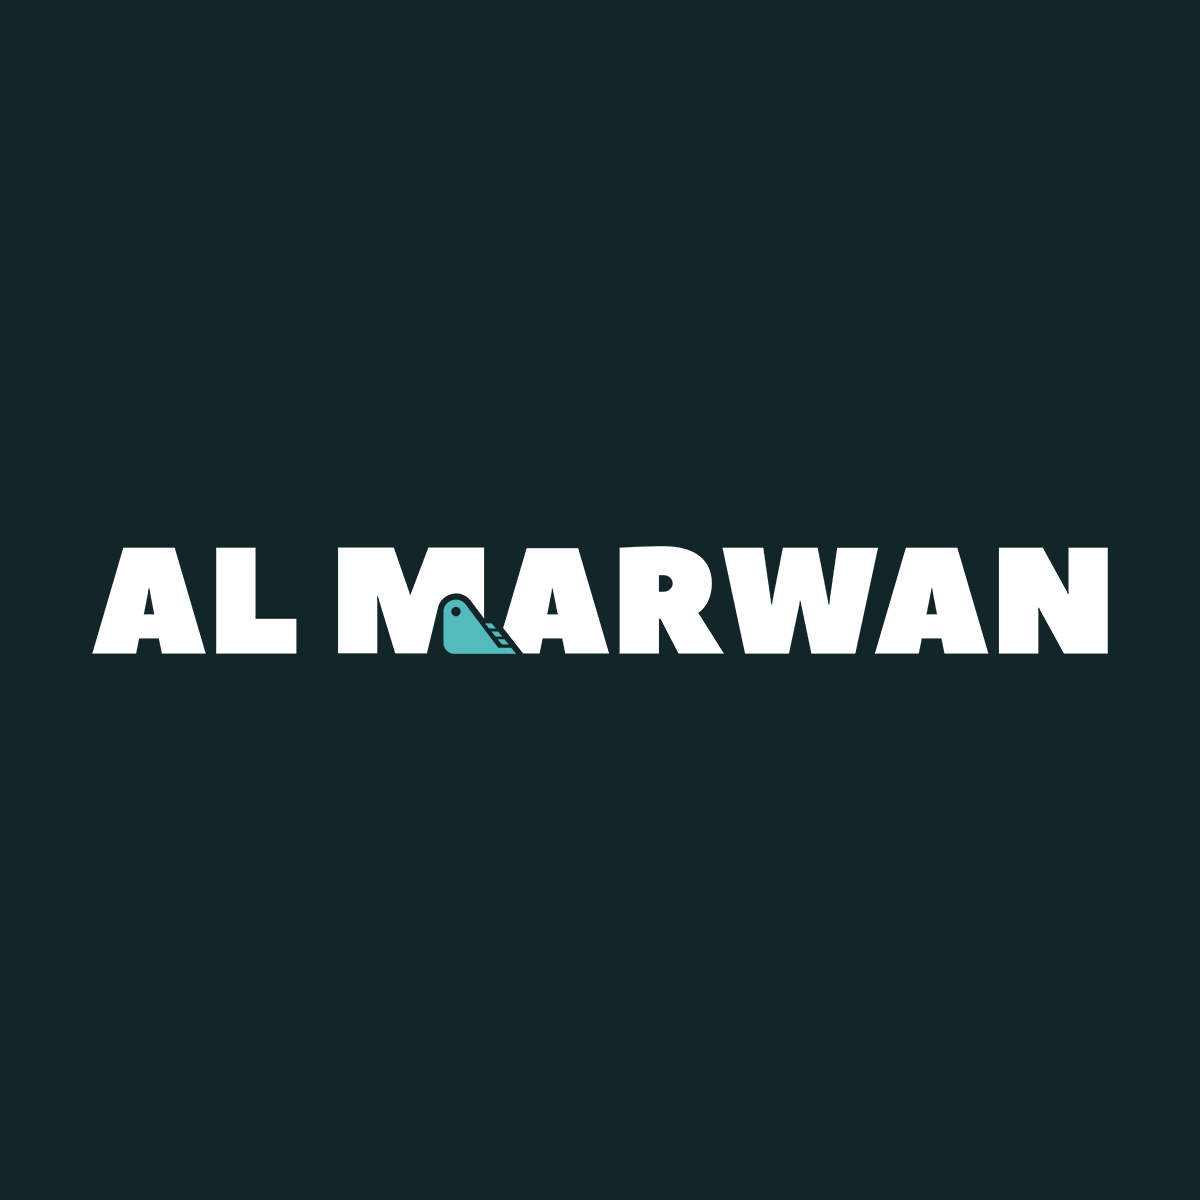 Al Marwan Heavy Machinery